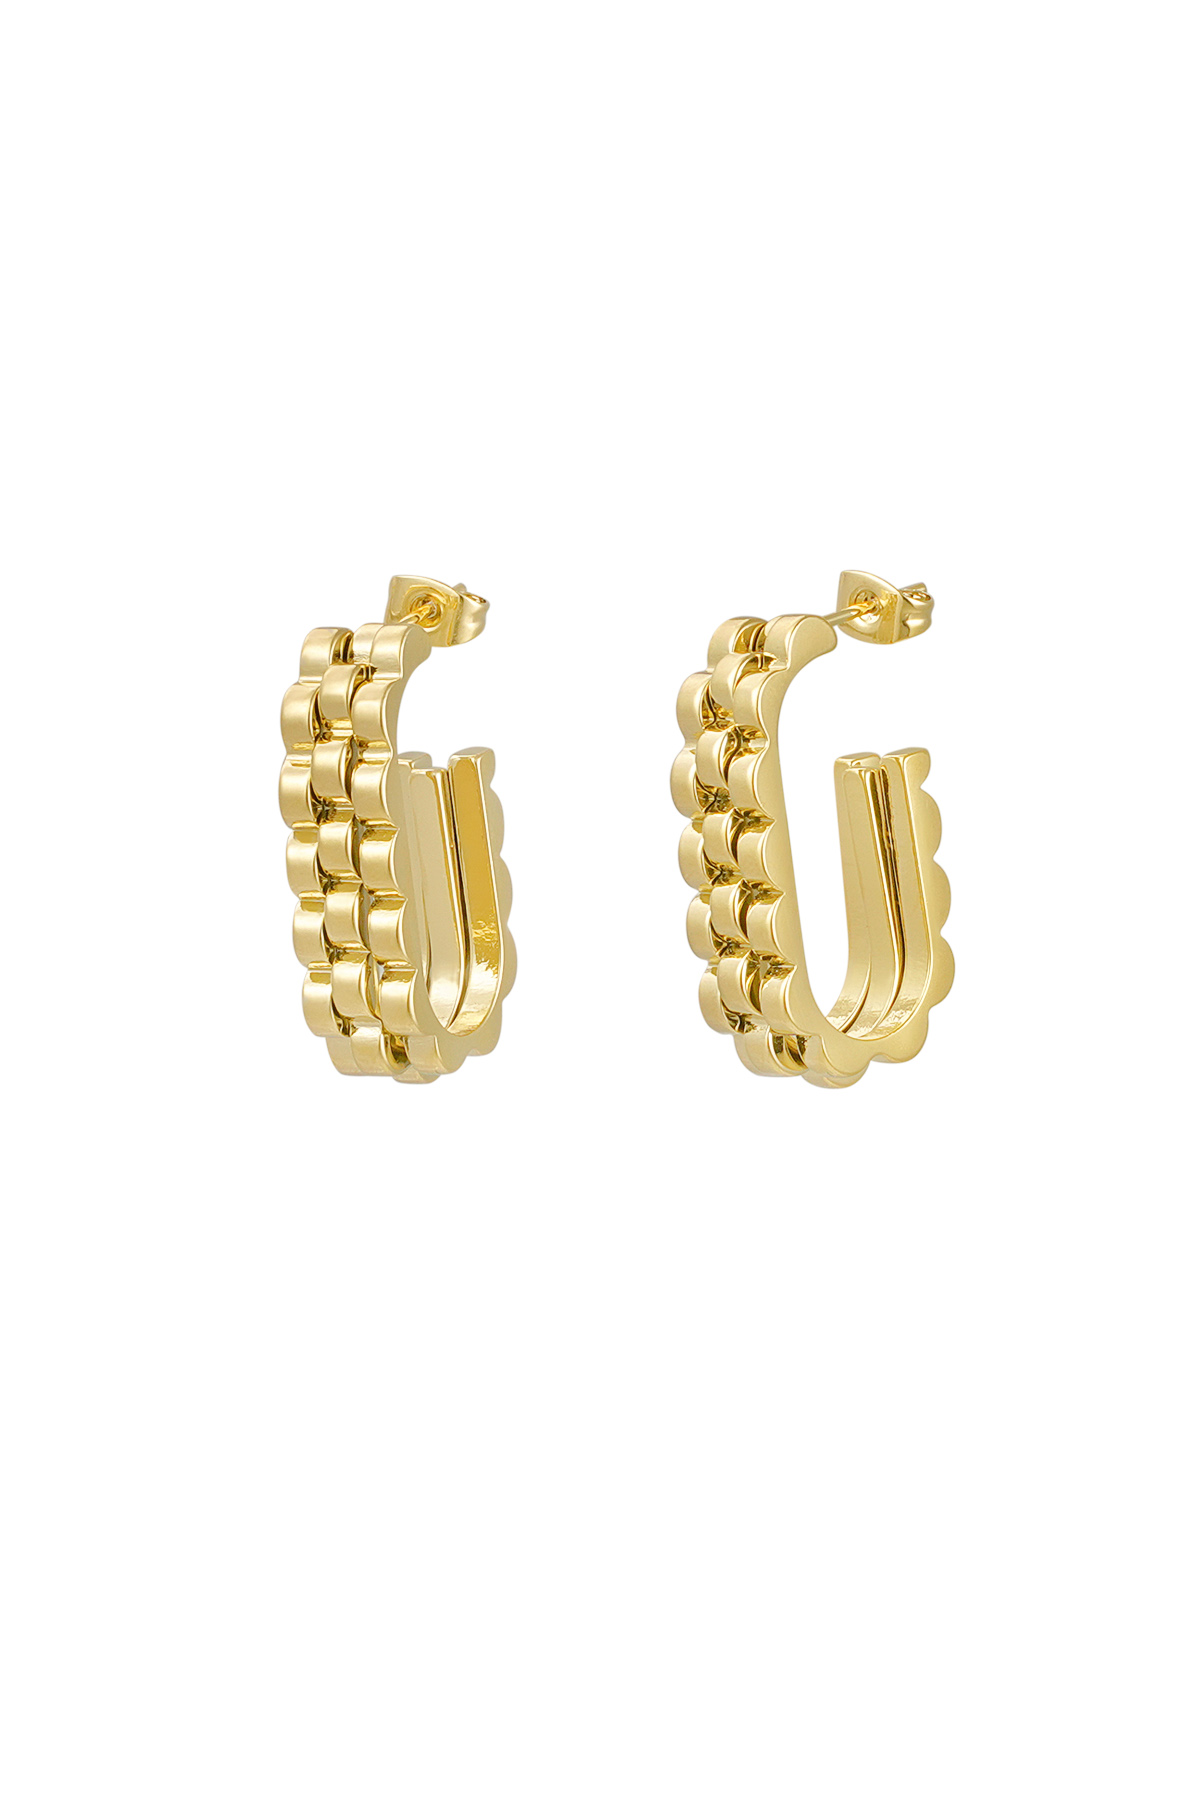 Earrings elongated link in link - gold